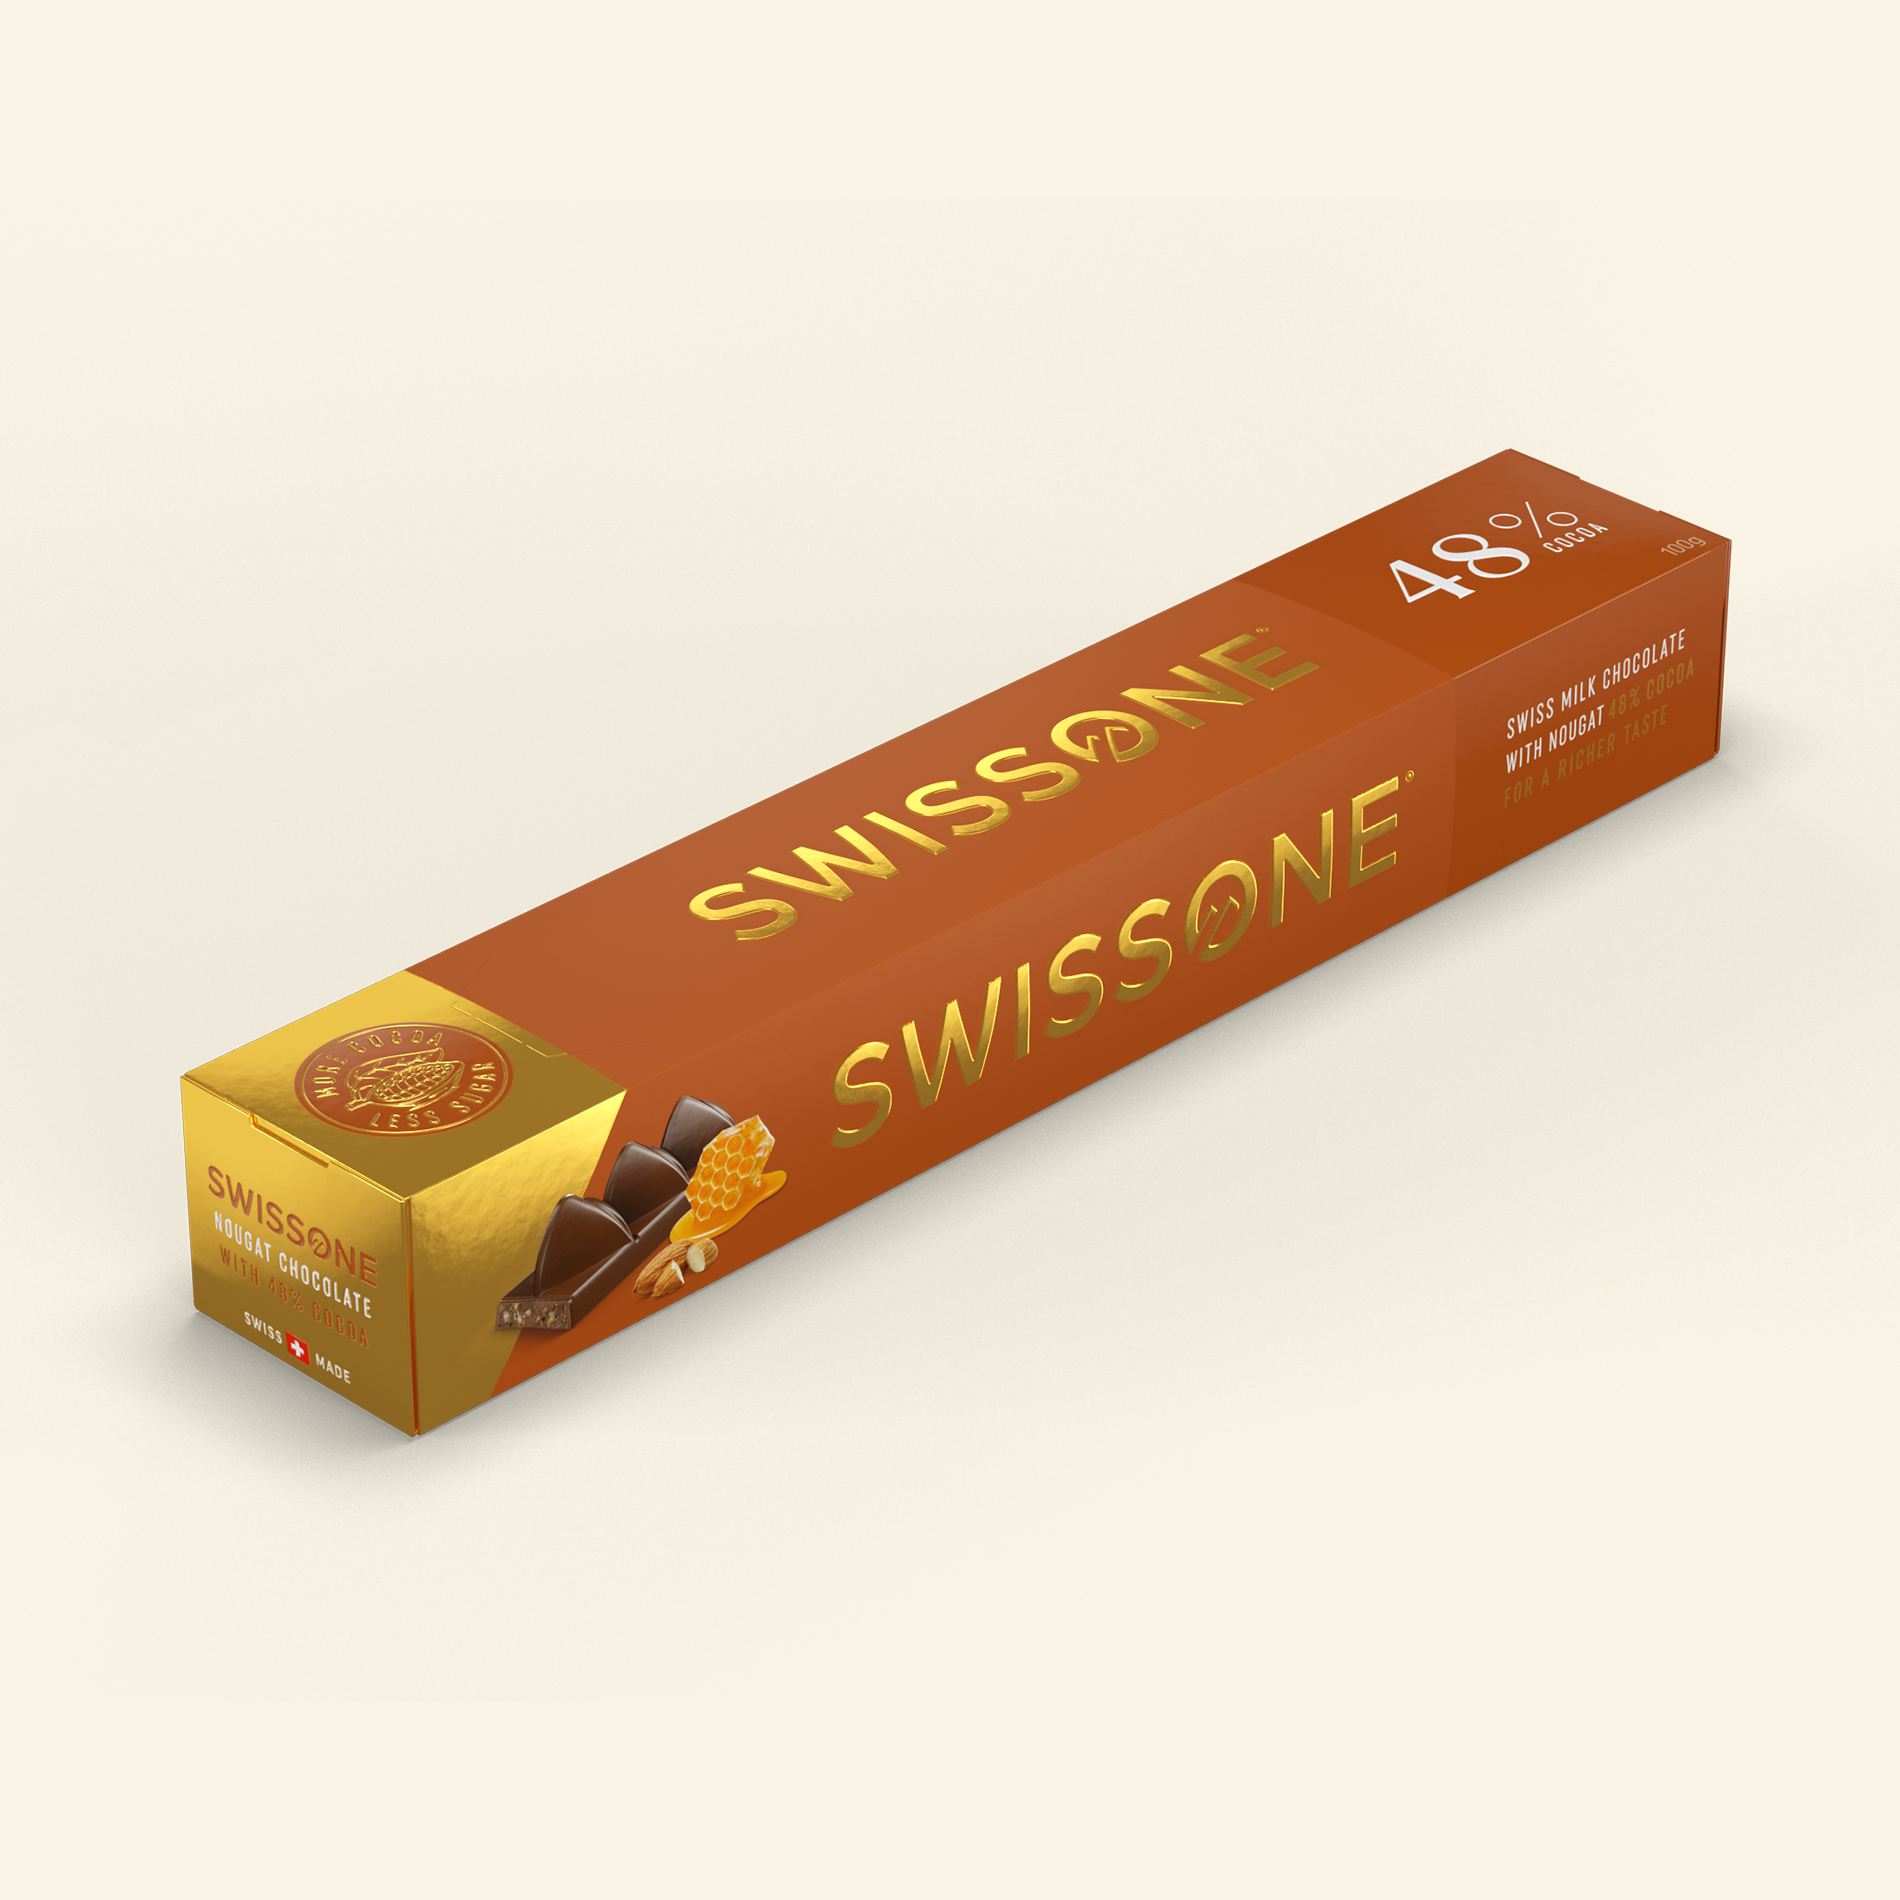 Swissone Milk Chocolate with Nougat 48%, 100g